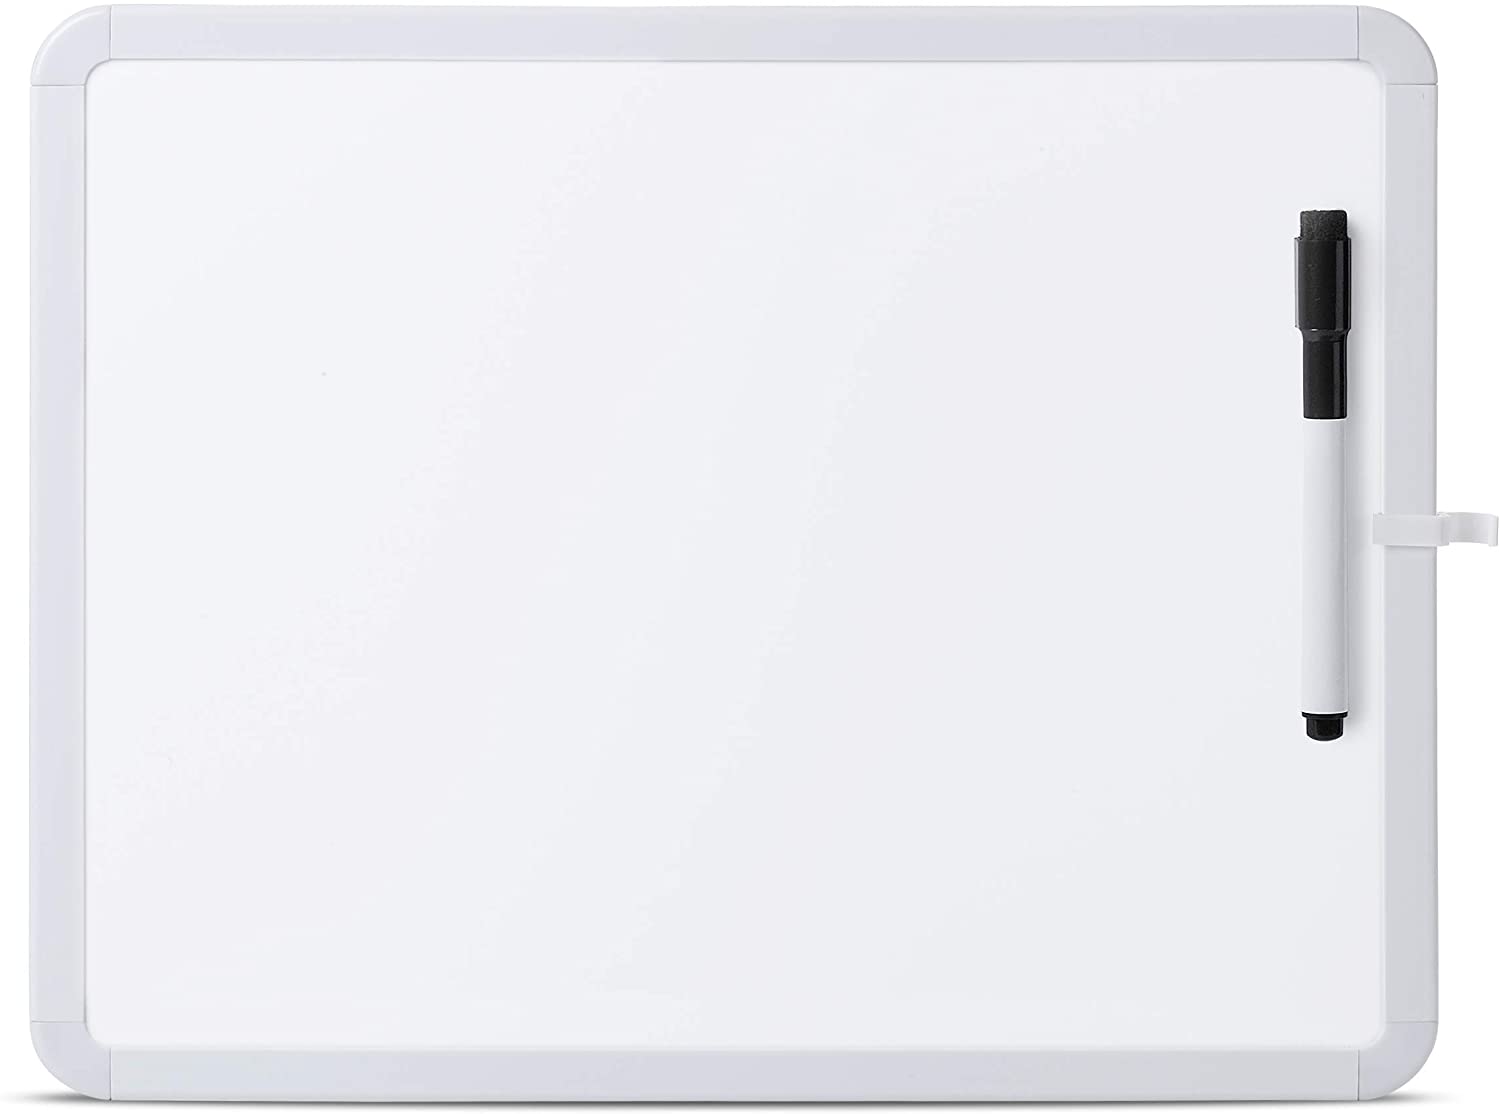 Mr. Pen- Dry Erase Board, 14” x 11” with a Black Dry Erase Marker, Small White Board, White Board for Kids, White Board for